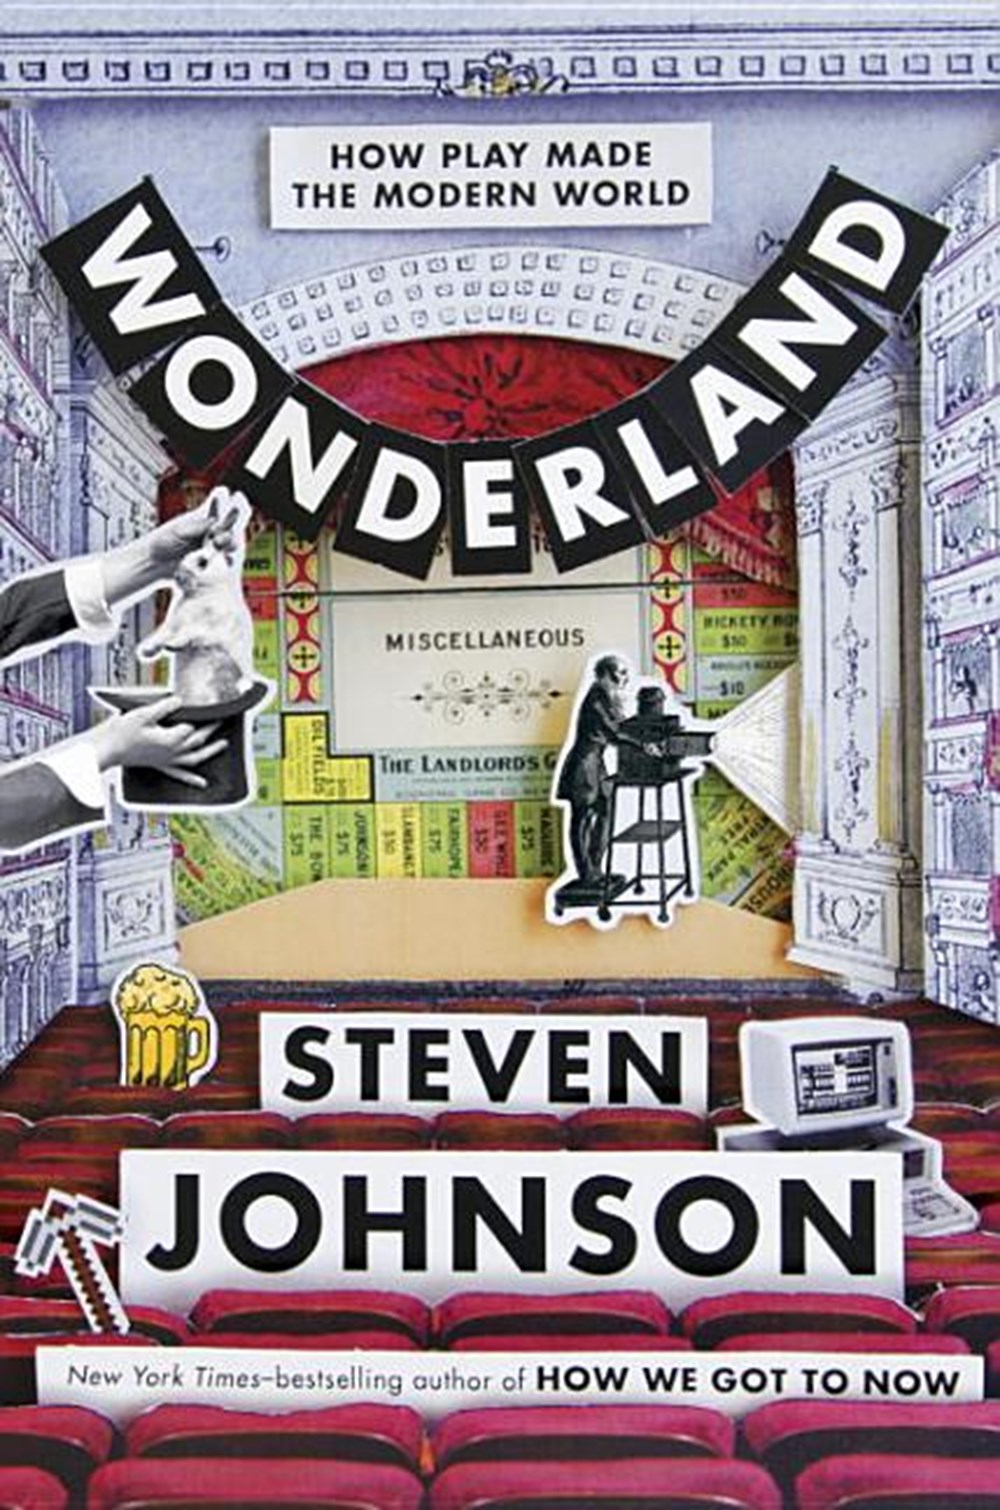 Wonderland How Play Made the Modern World